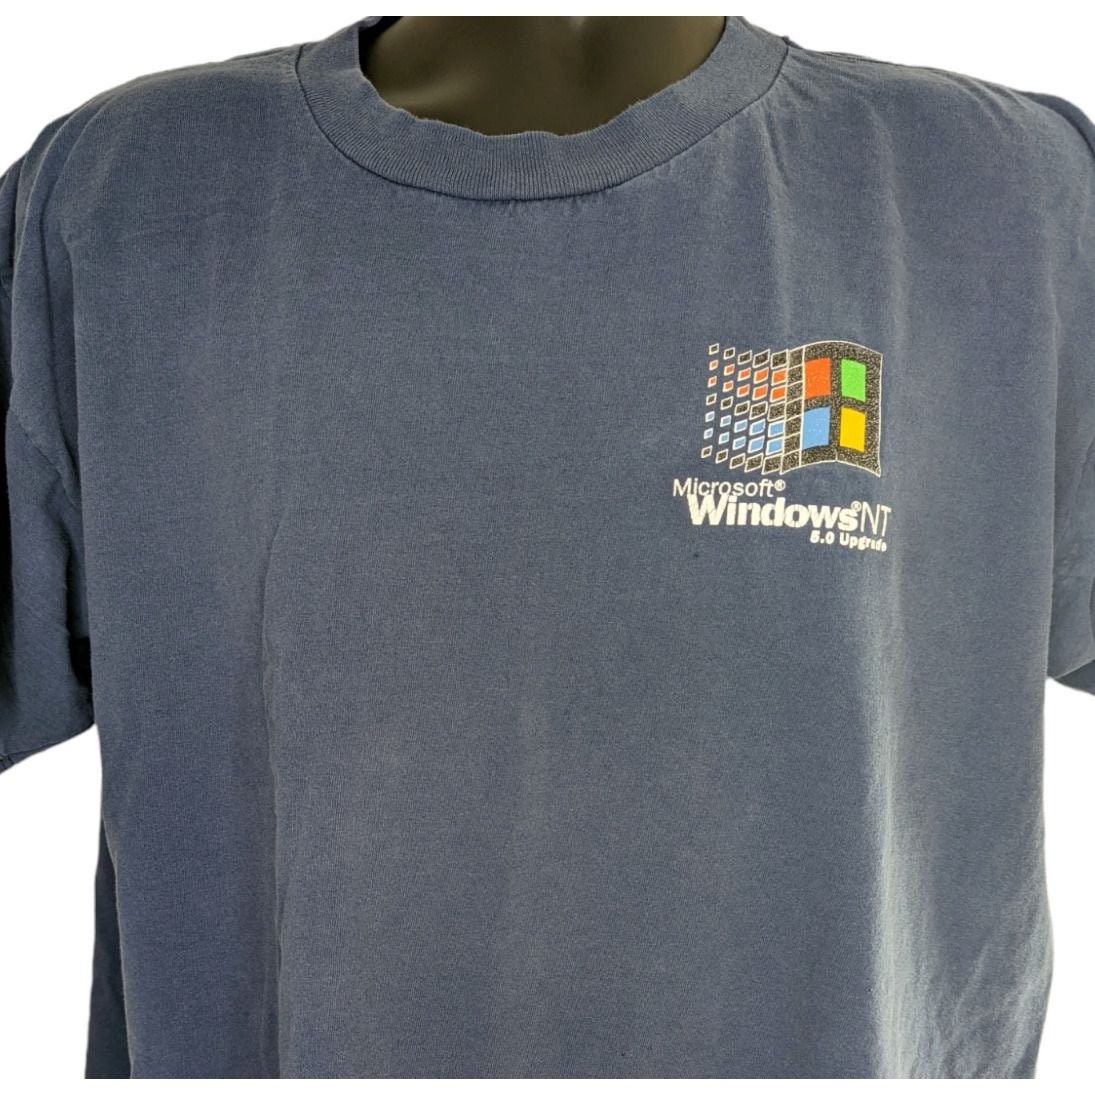 Windows Microsoft NT 5.0 Software Vintage 90s Tshirt Size XL ...